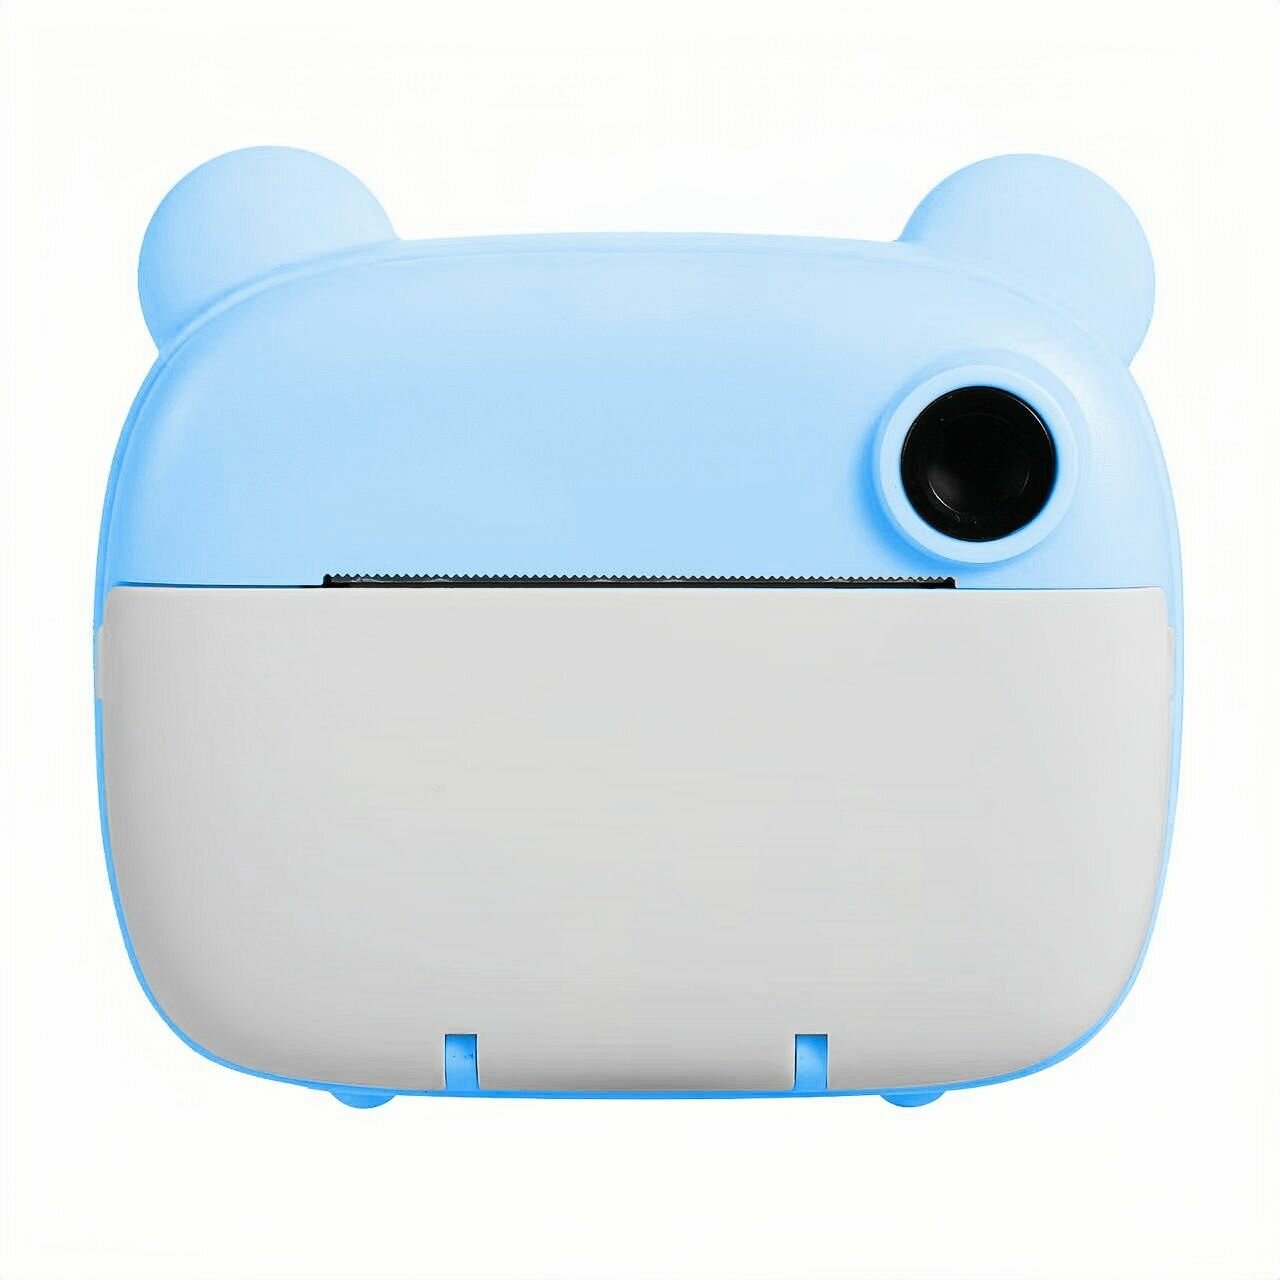 Aimoto MagicCam 2 Детский фотоаппарат. Цвет: голубой